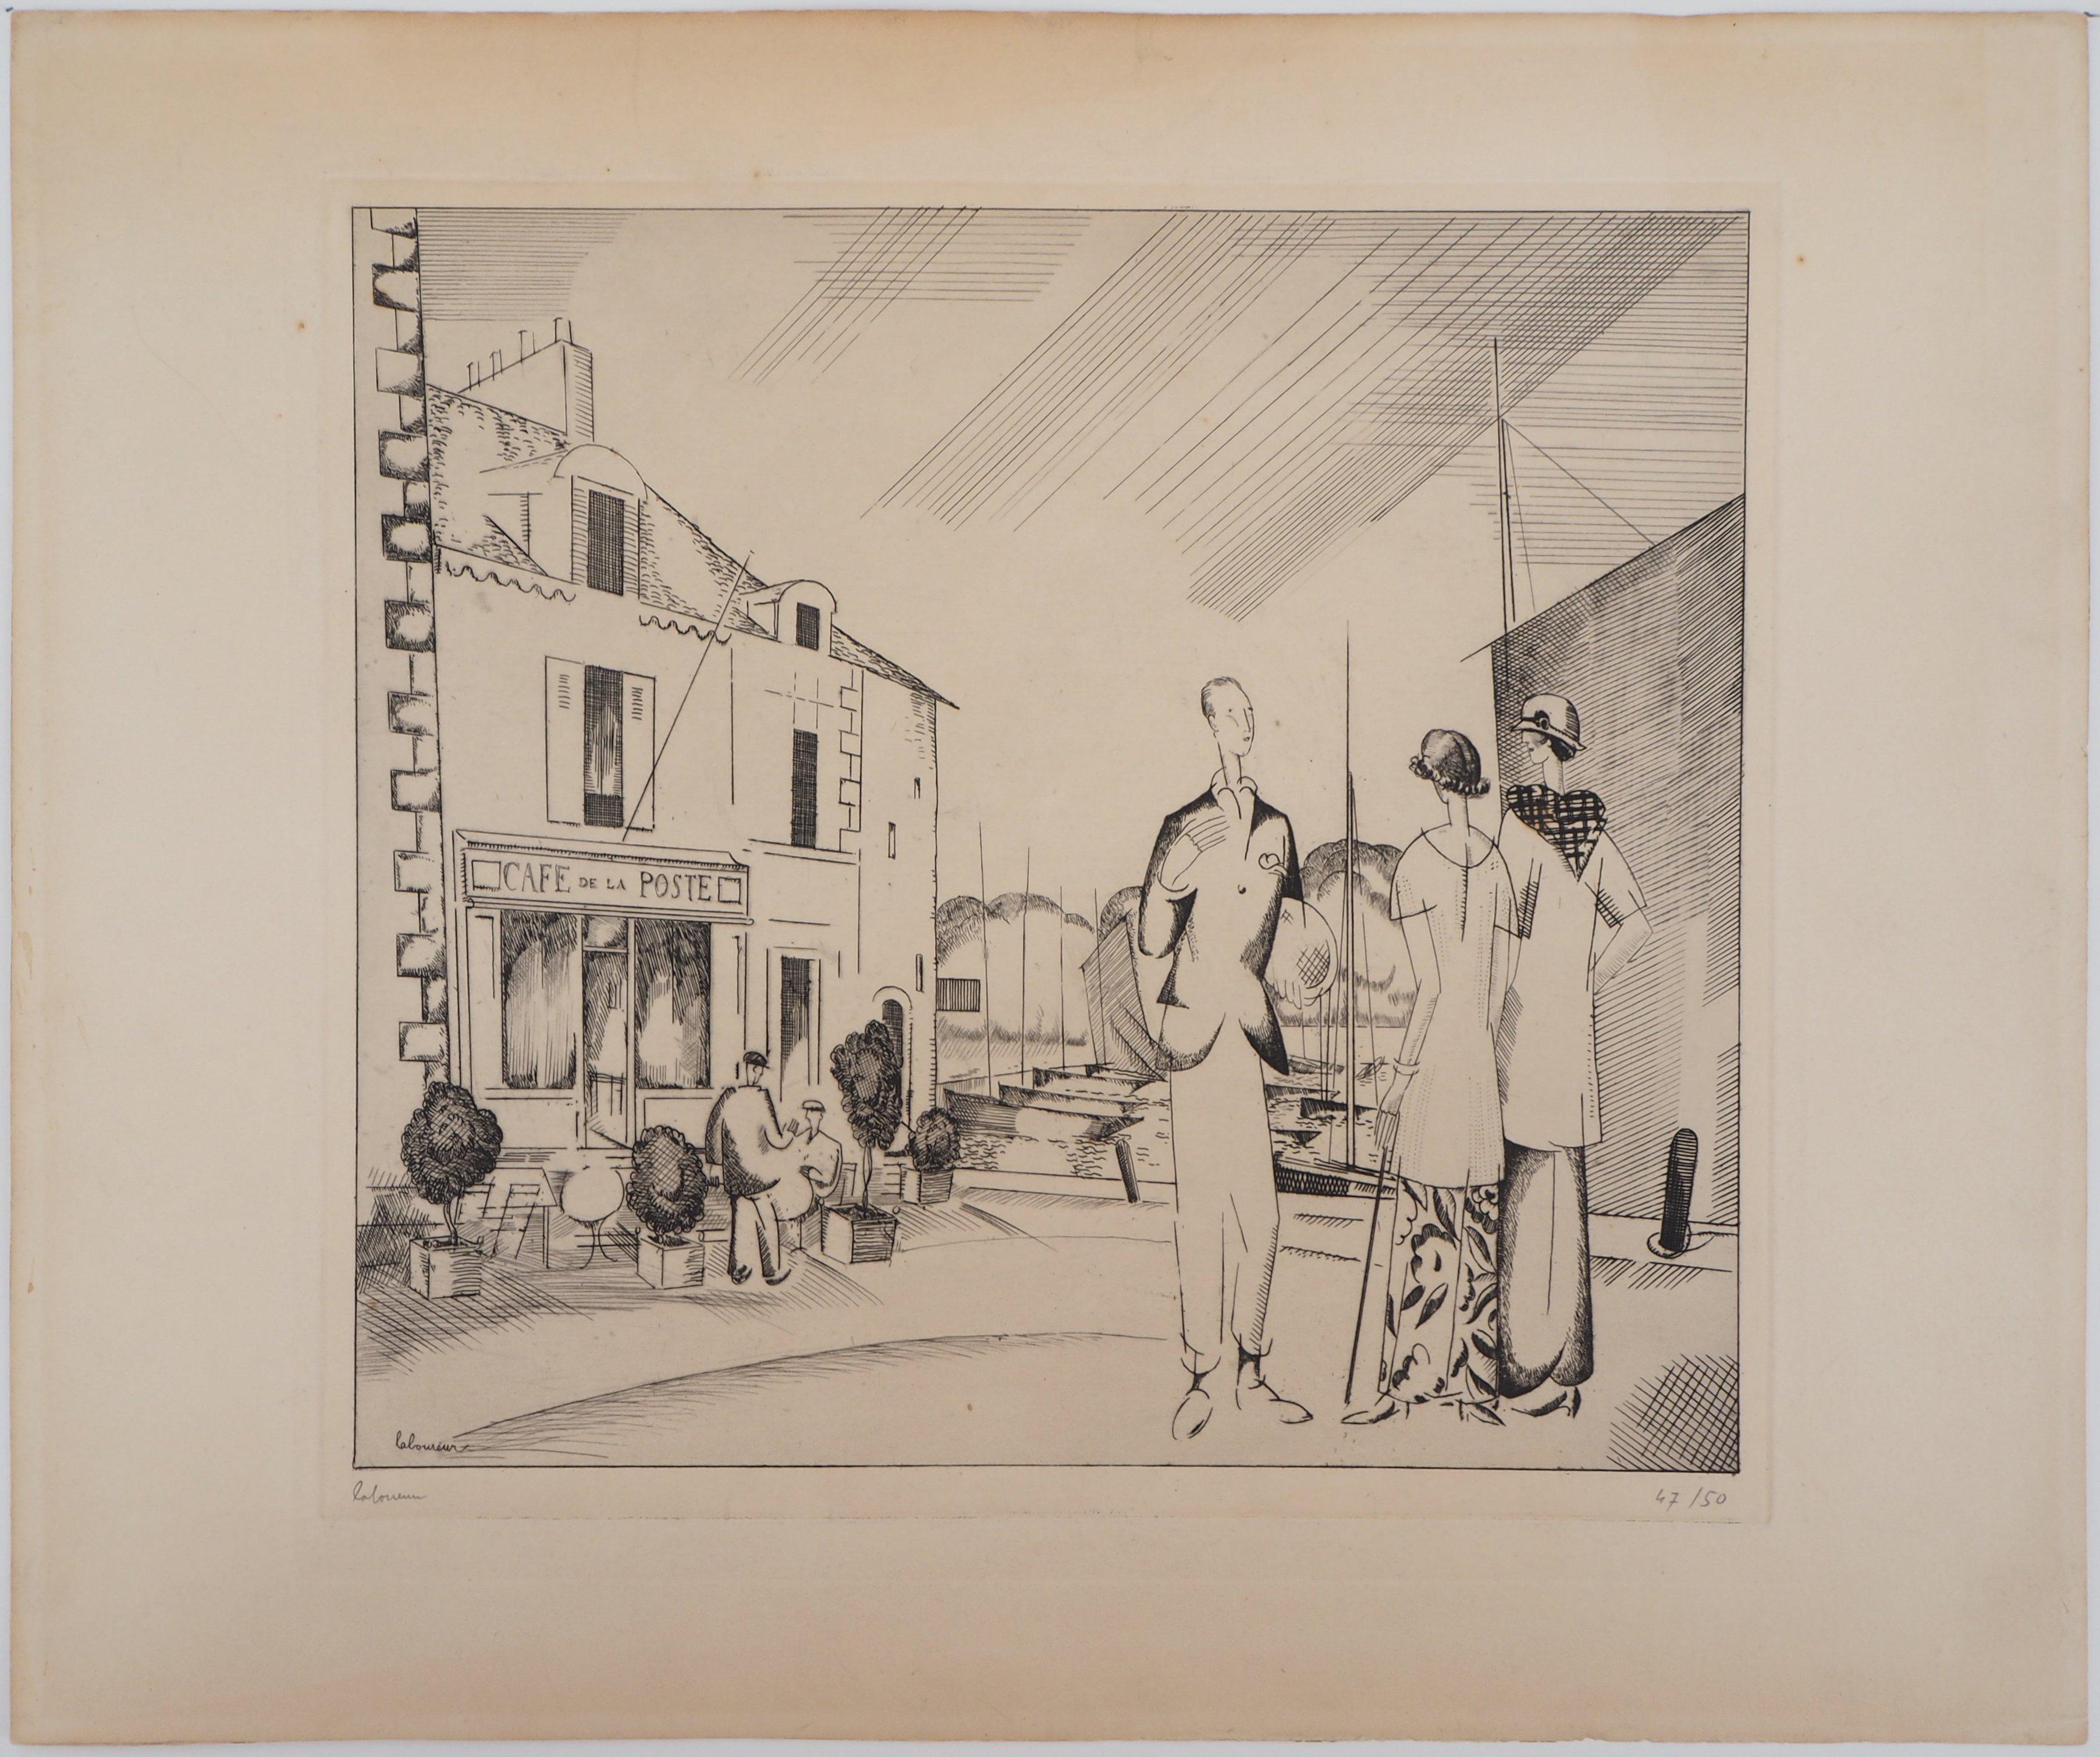 The Harbor Cafe - Original Etching, Handsigned - Print by Jean-Emile Laboureur